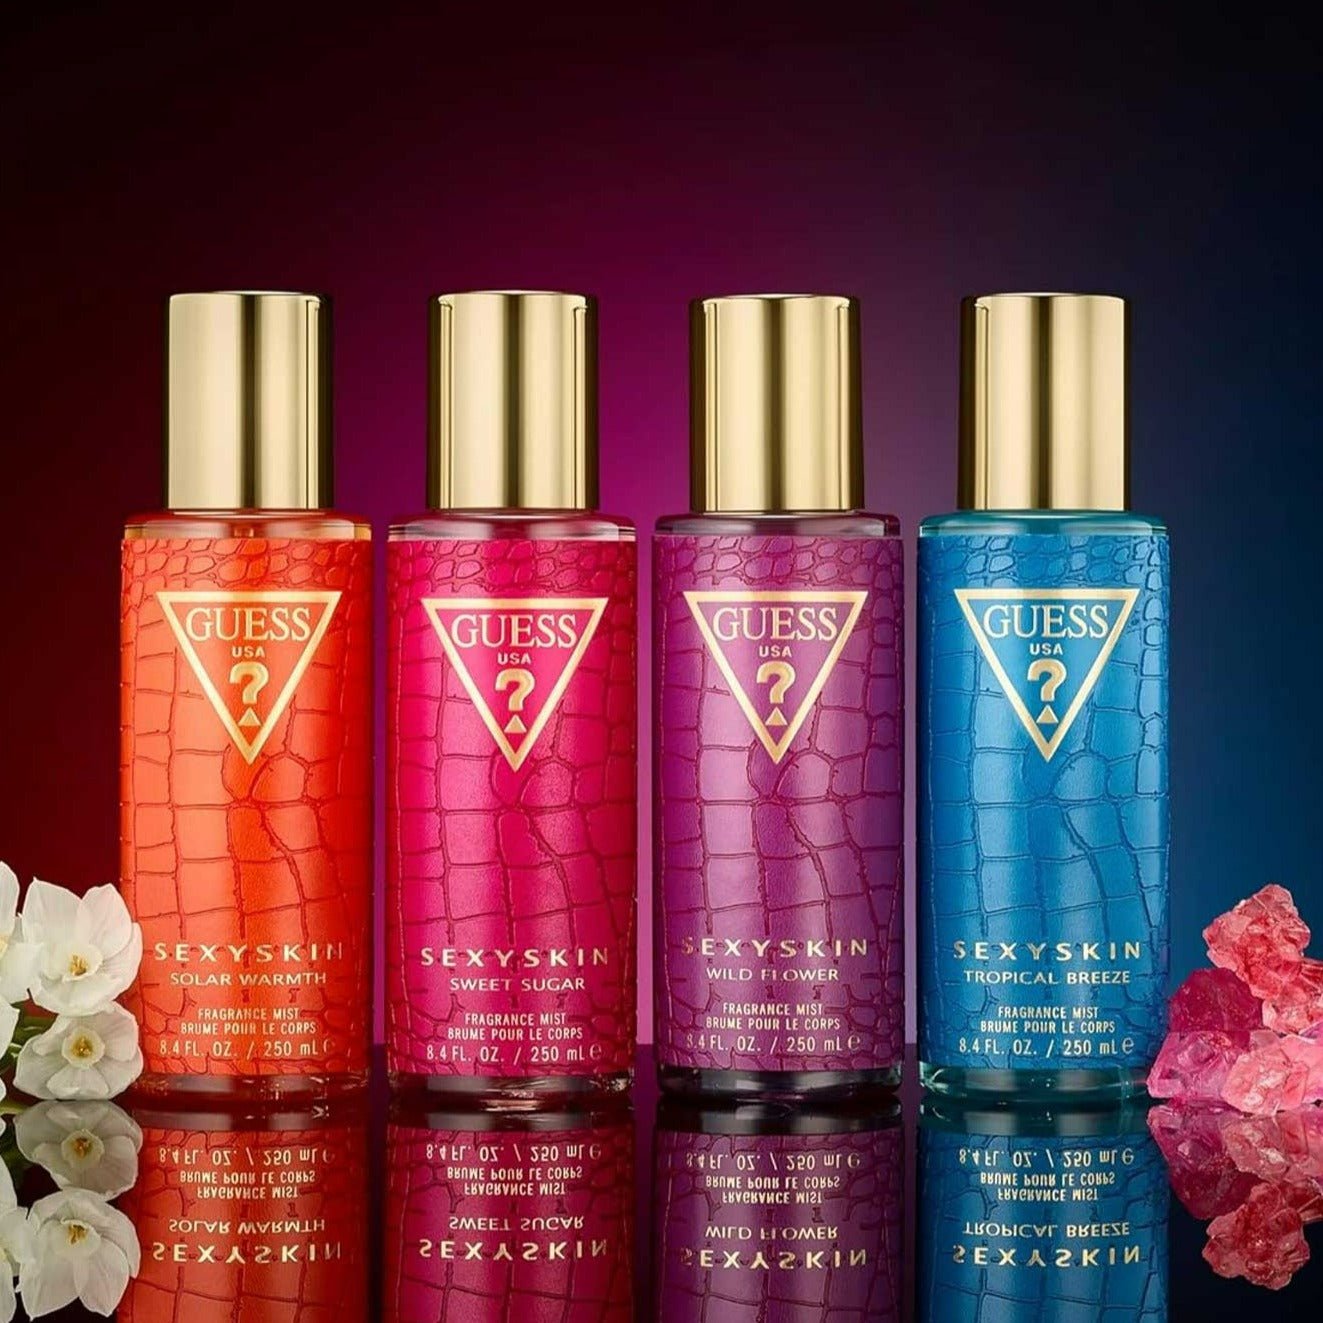 Guess Sexy Skin Tropical Breeze Body Mist | My Perfume Shop Australia